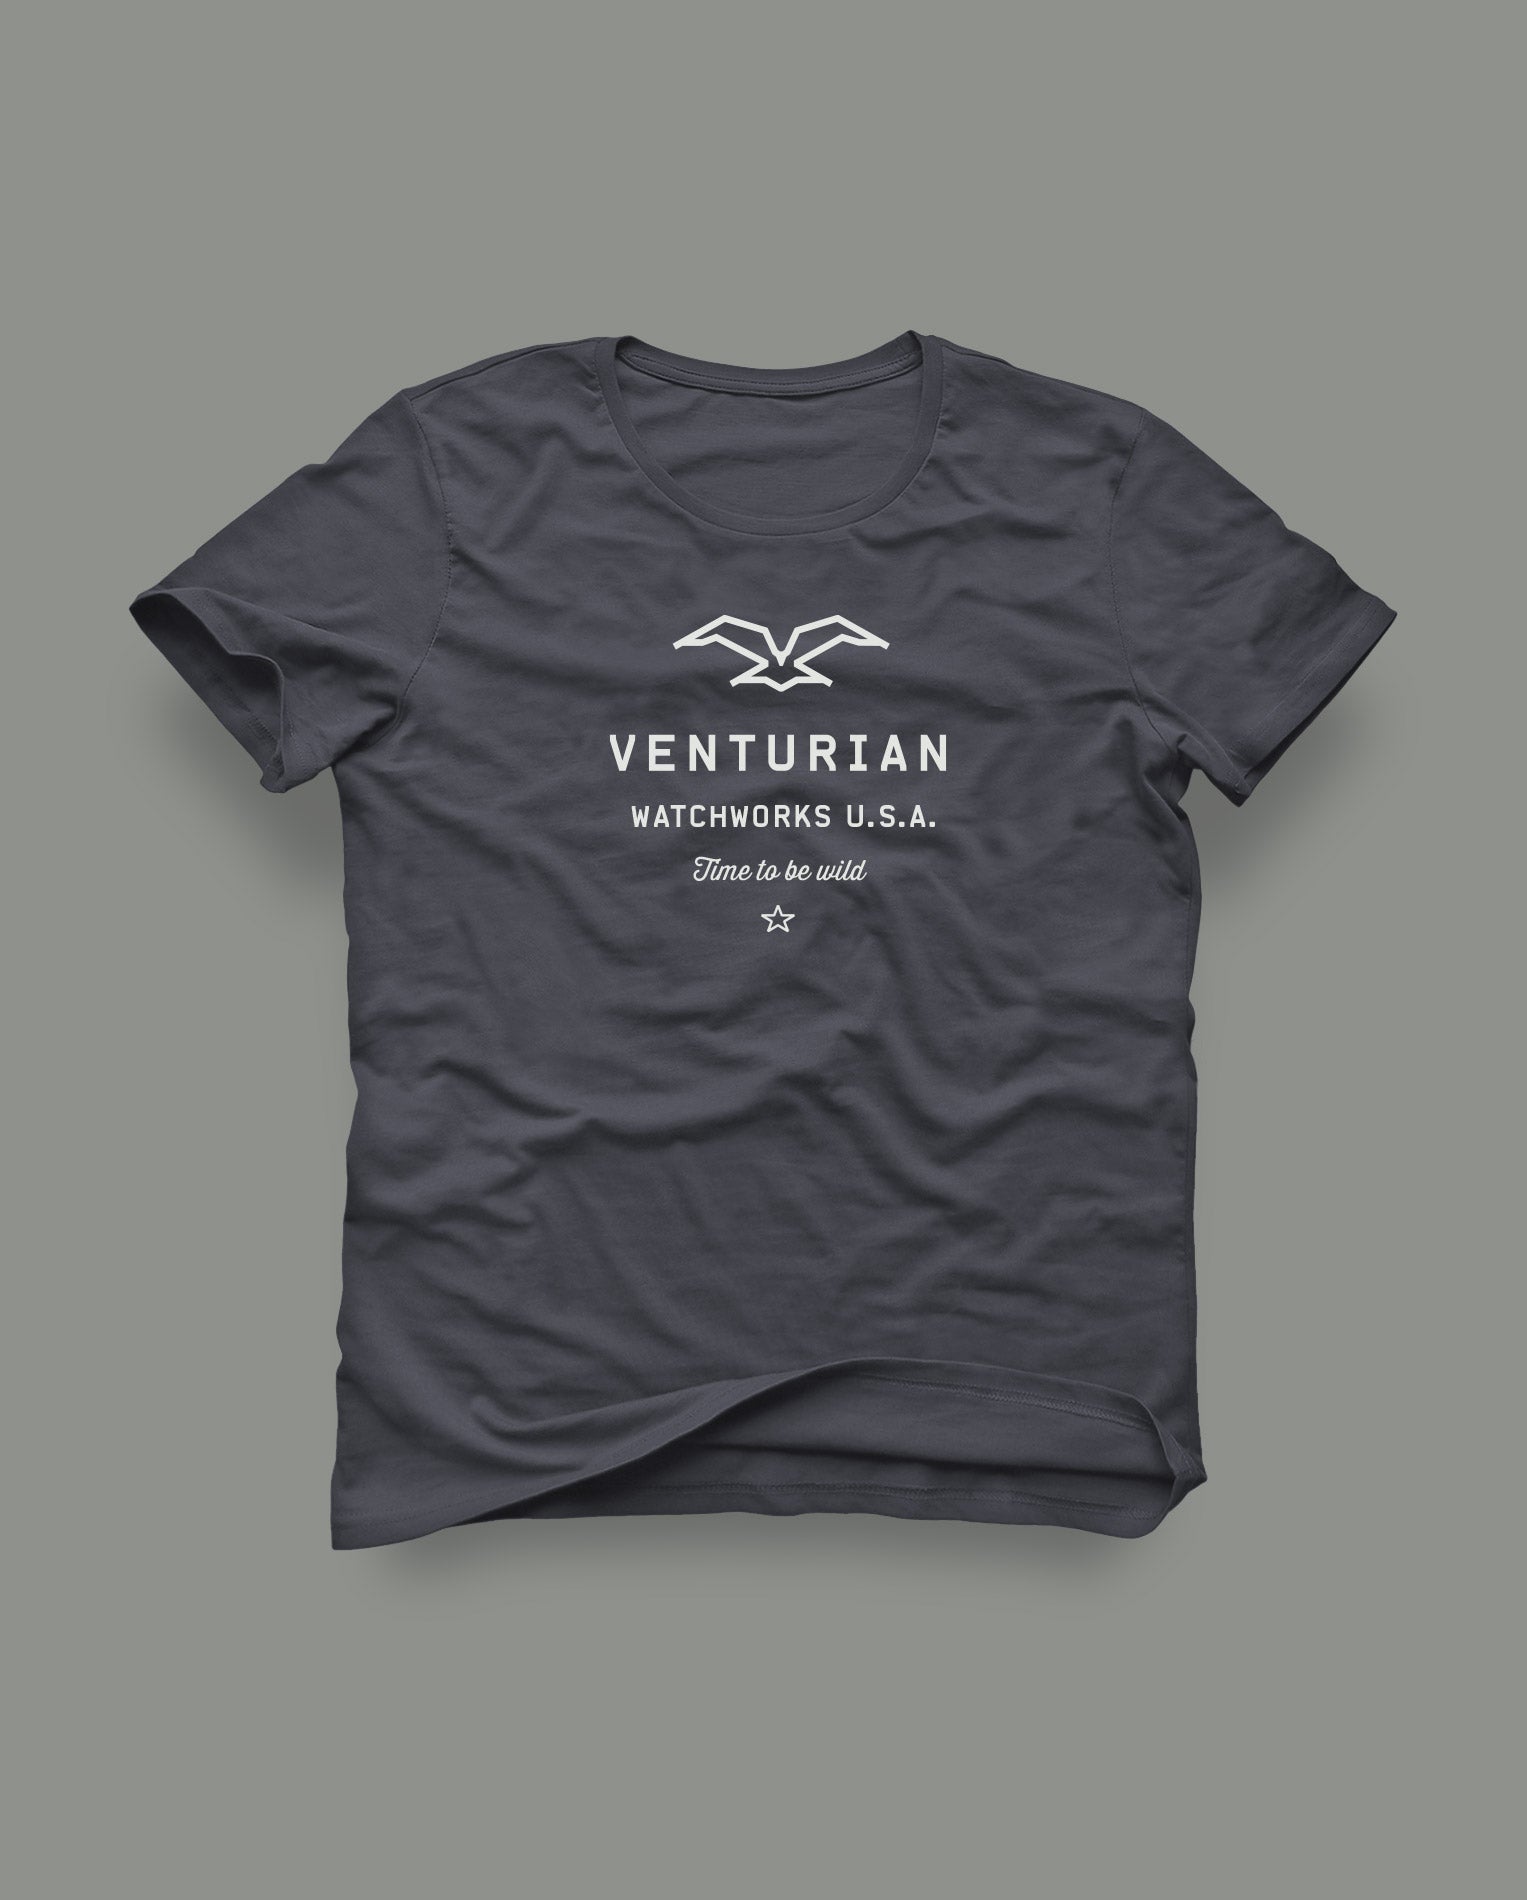 Venturian WatchWorks classic logo gaphic tee shirt in select colors. 